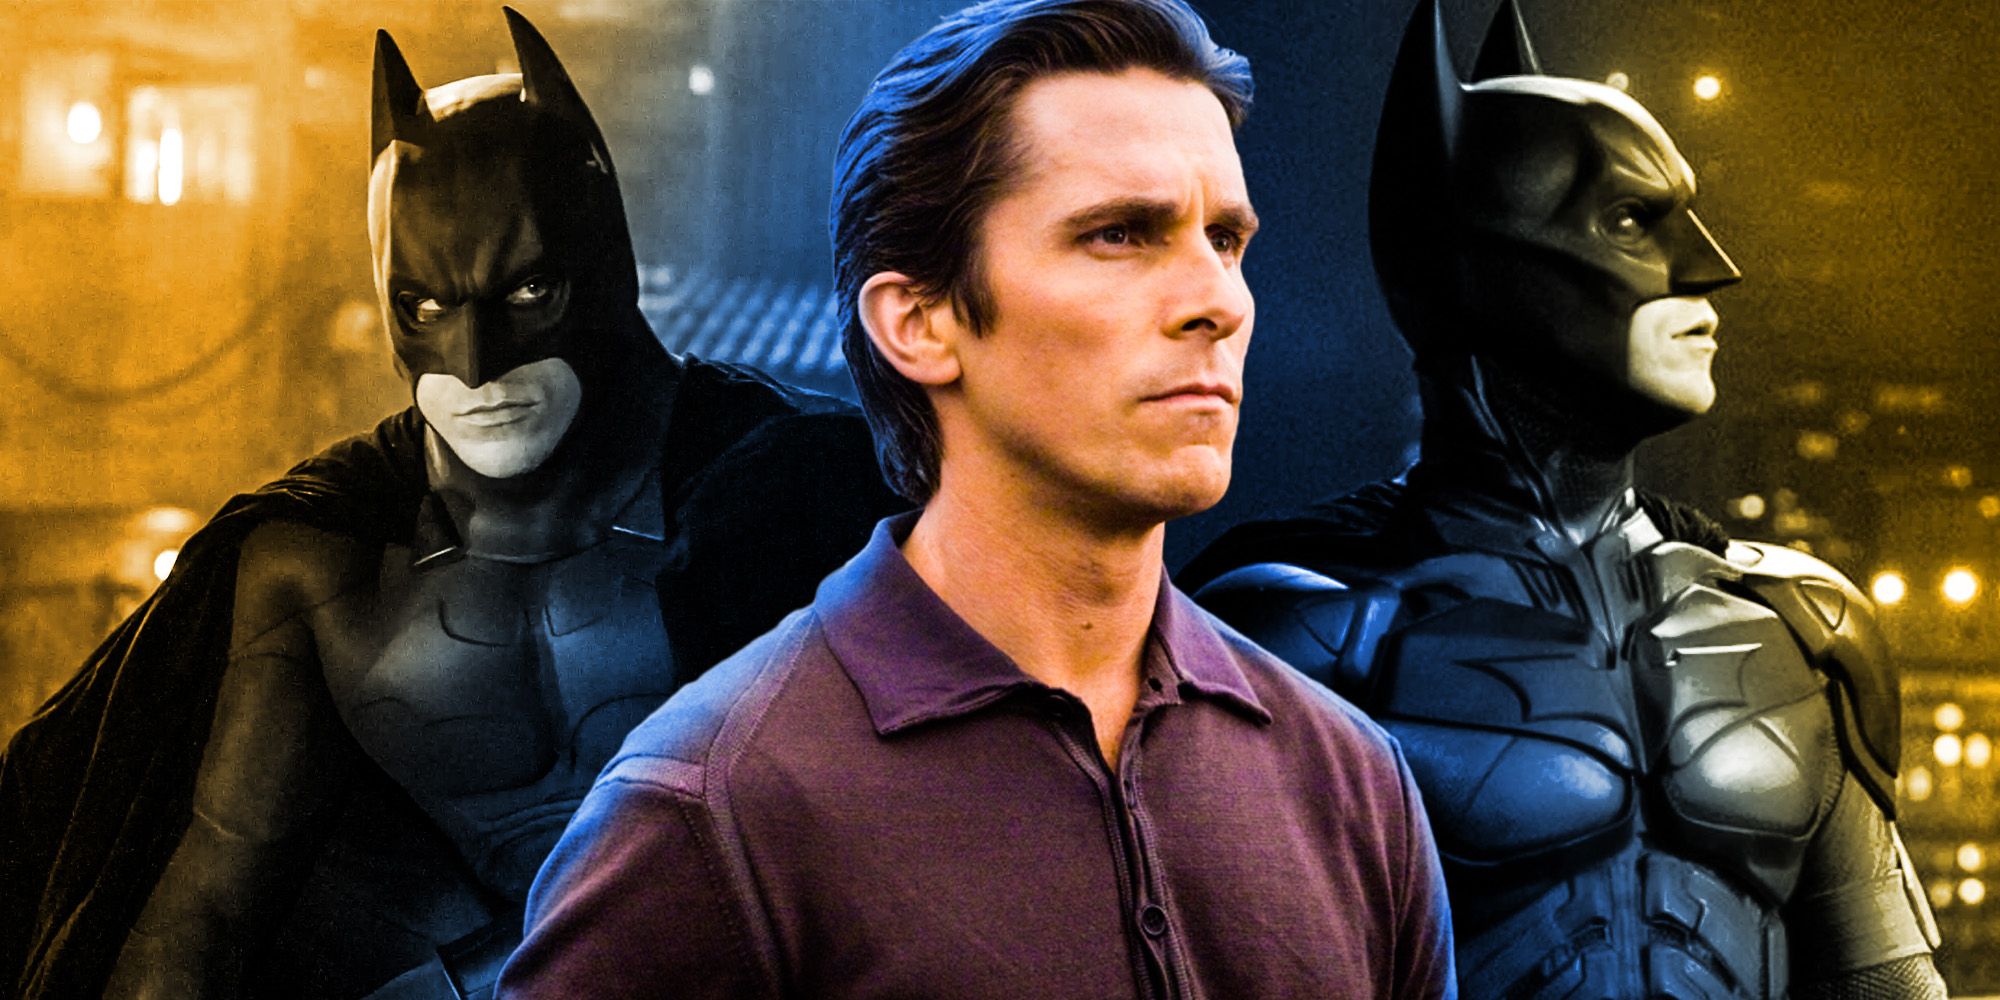 Nolan's Dark Knight Trilogy Used A Clever Genre Trick To Make Batman Work